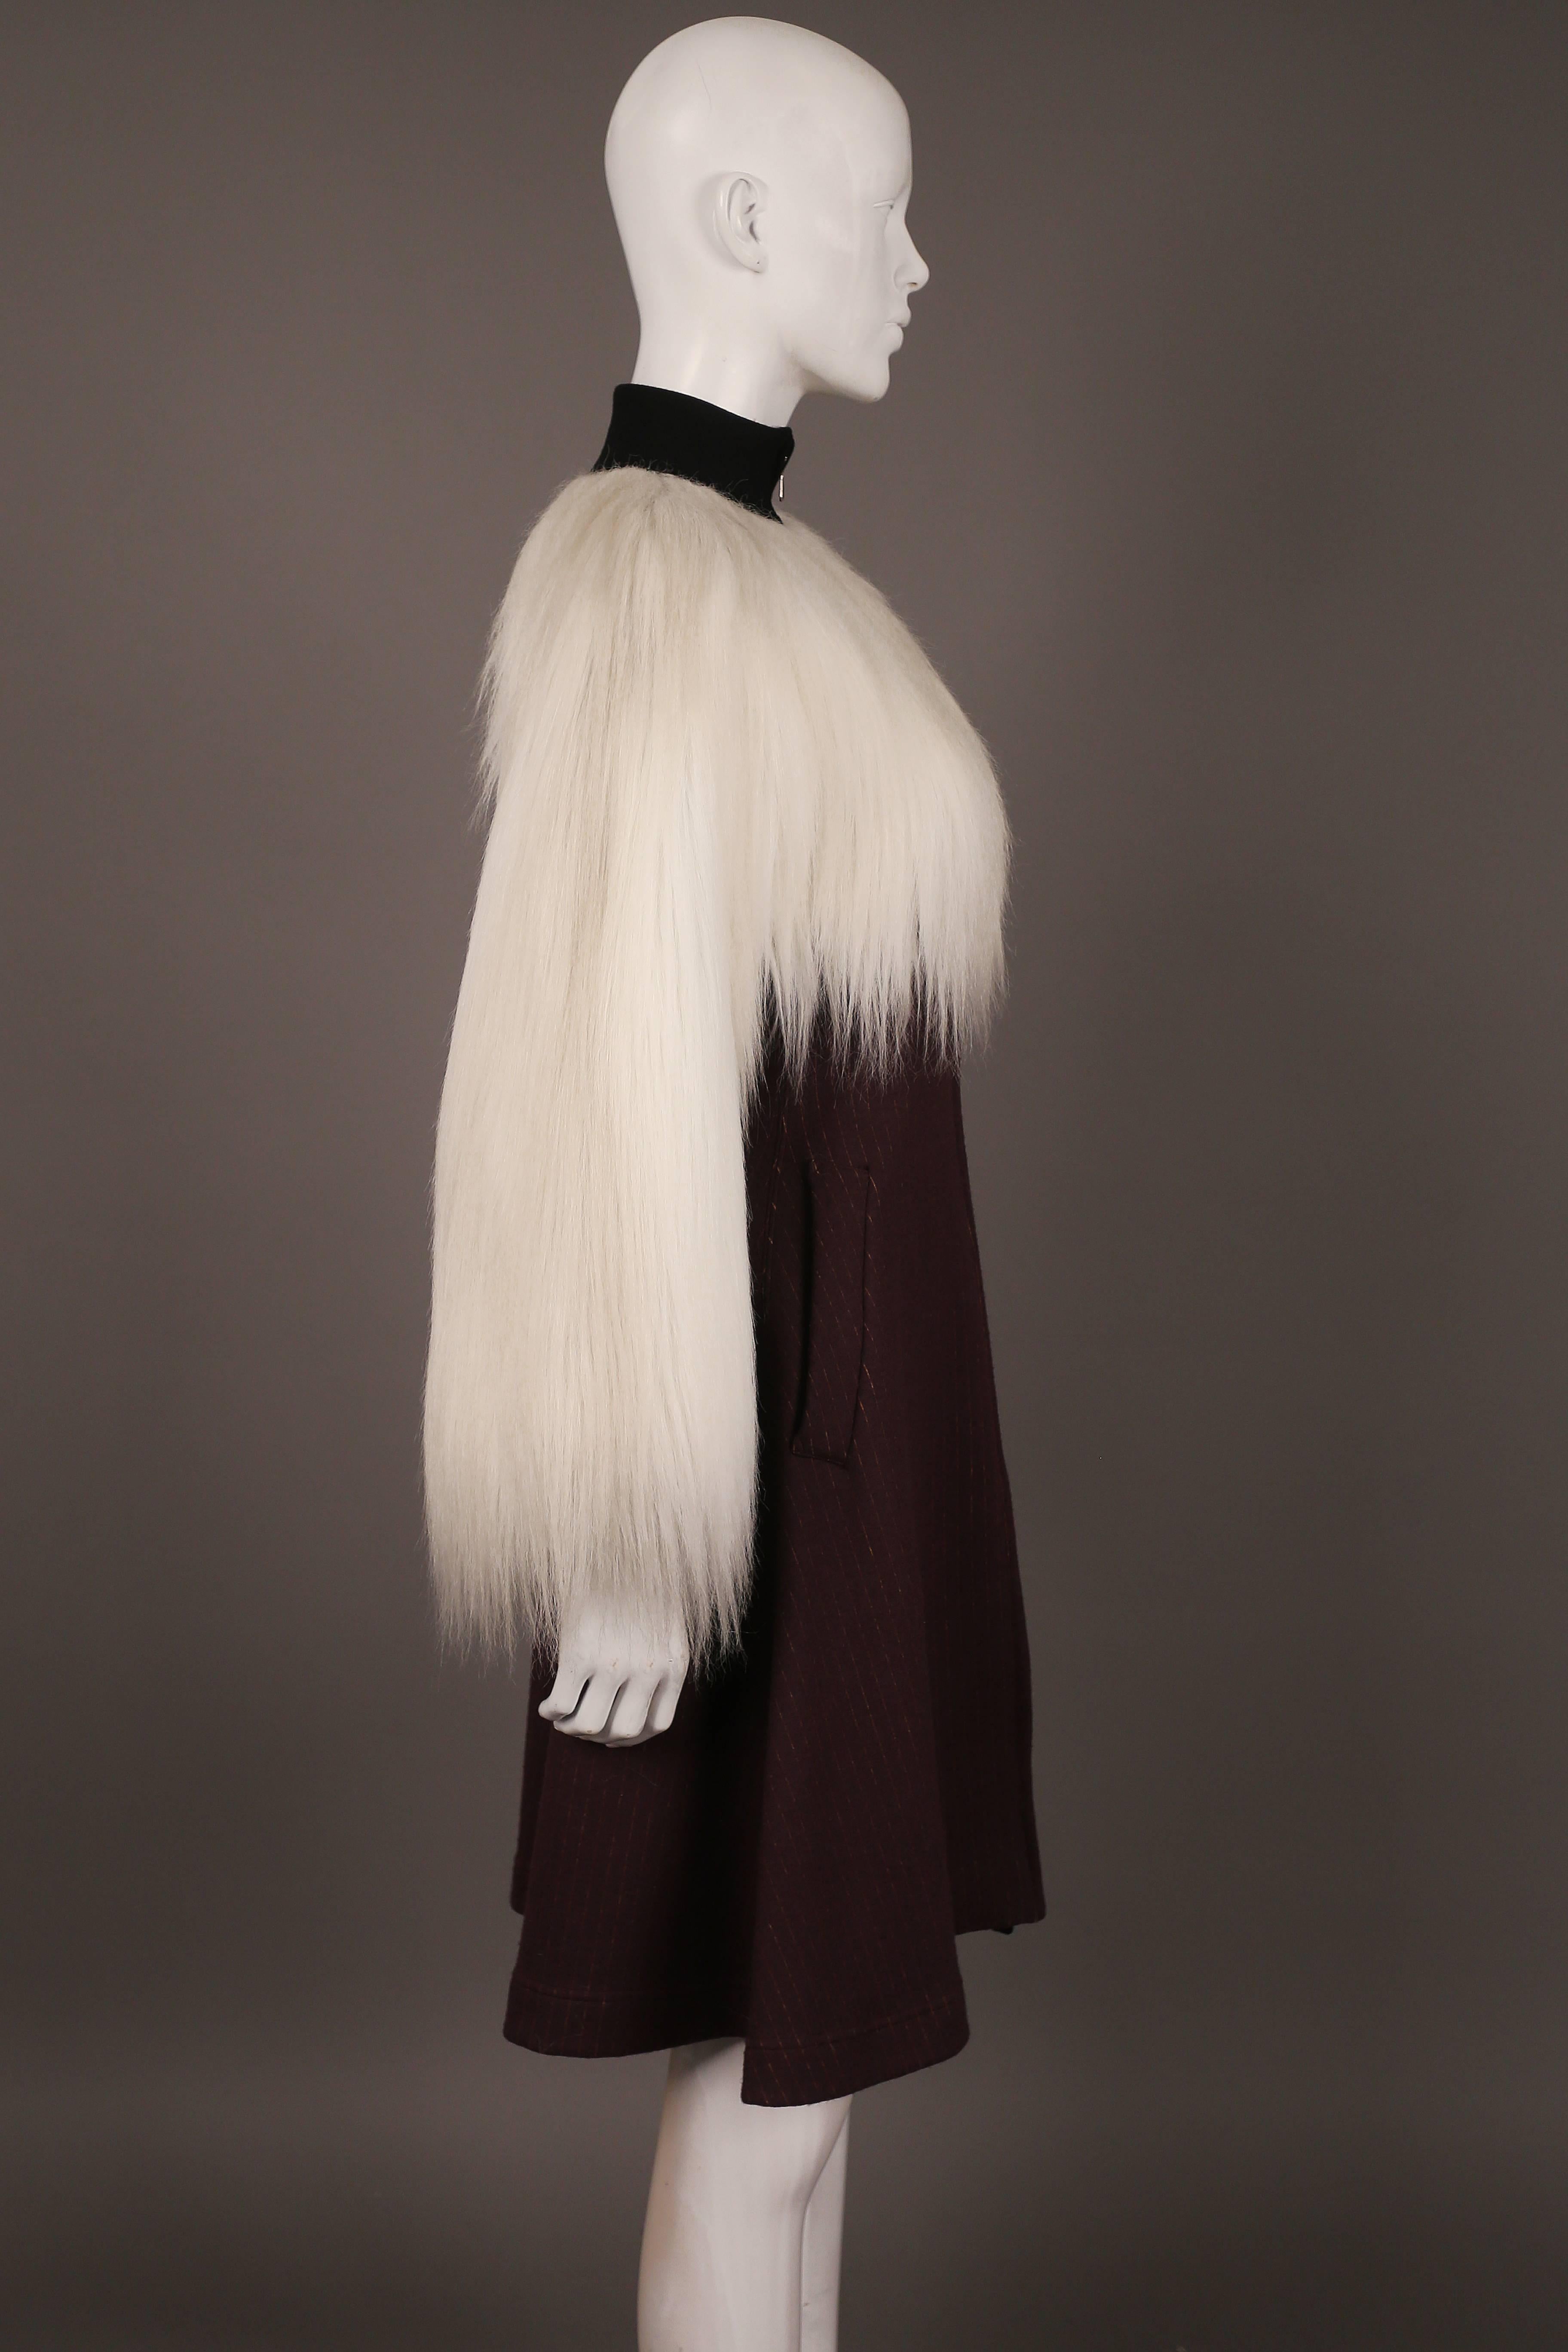 Black Jean Paul Gaultier faux fur dress coat, c. 1993